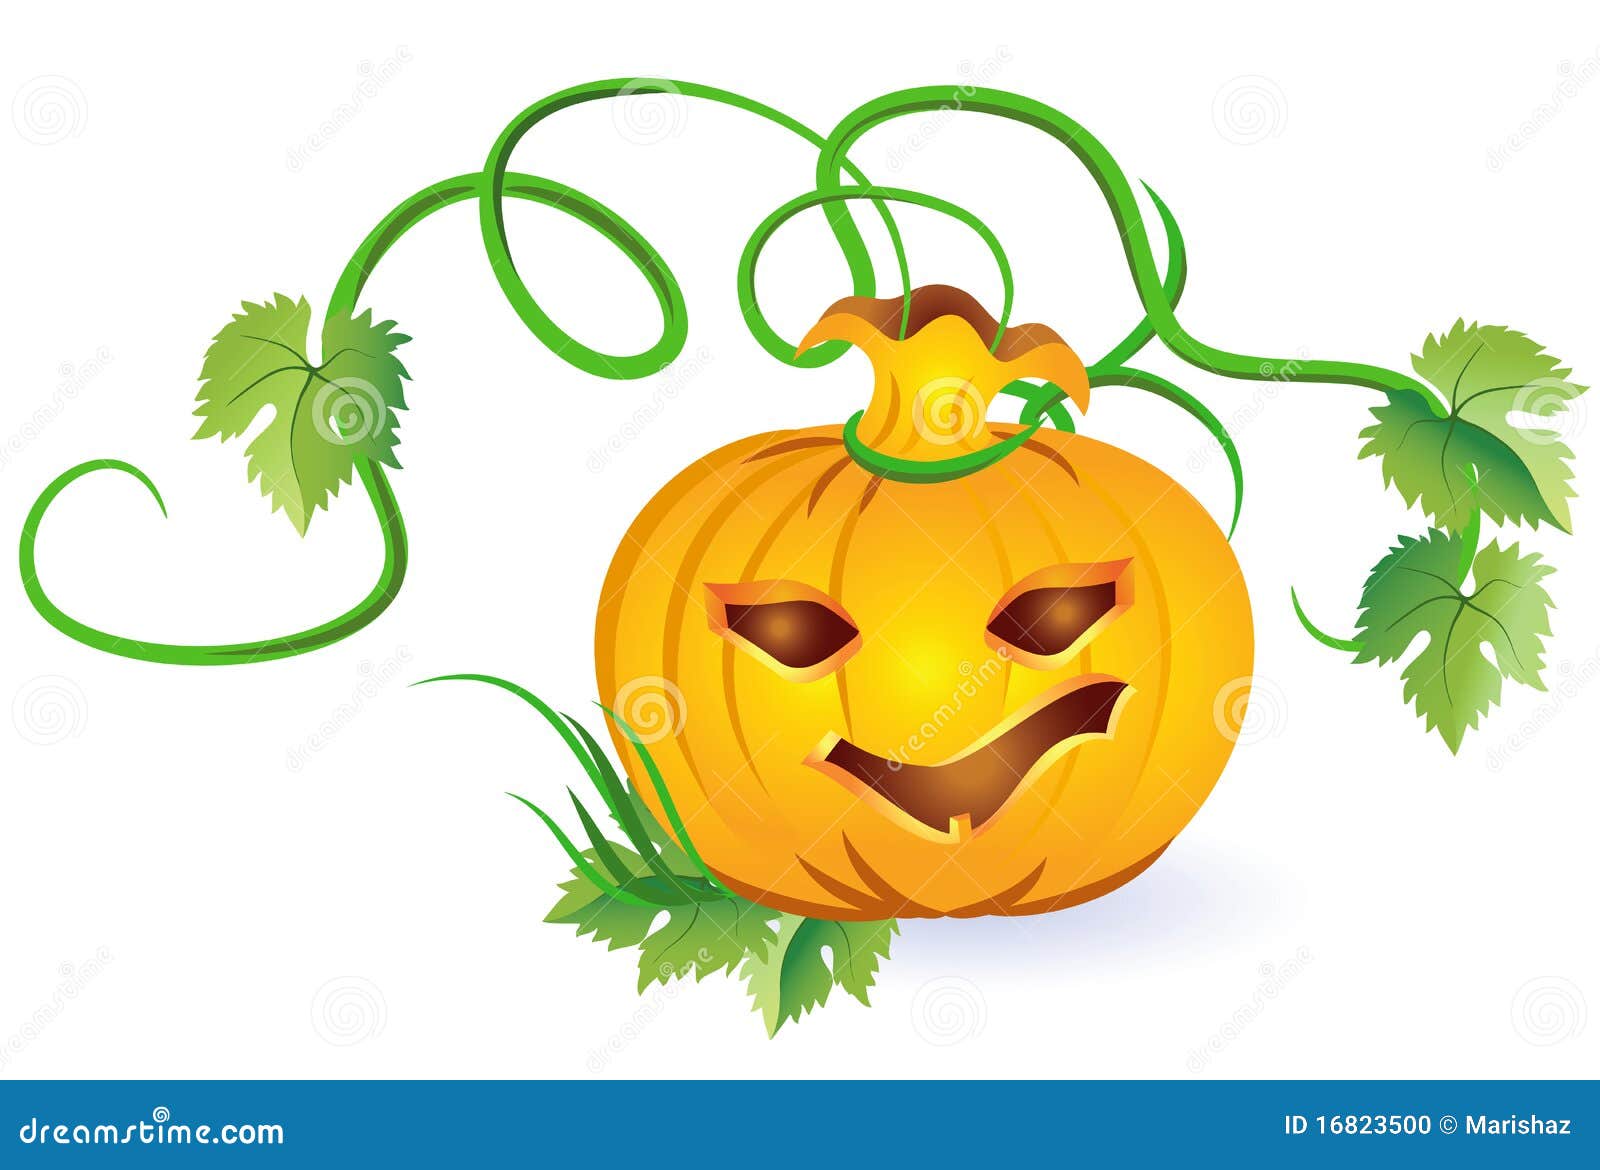 Funny halloween pumpkin stock vector. Illustration of funny - 16823500